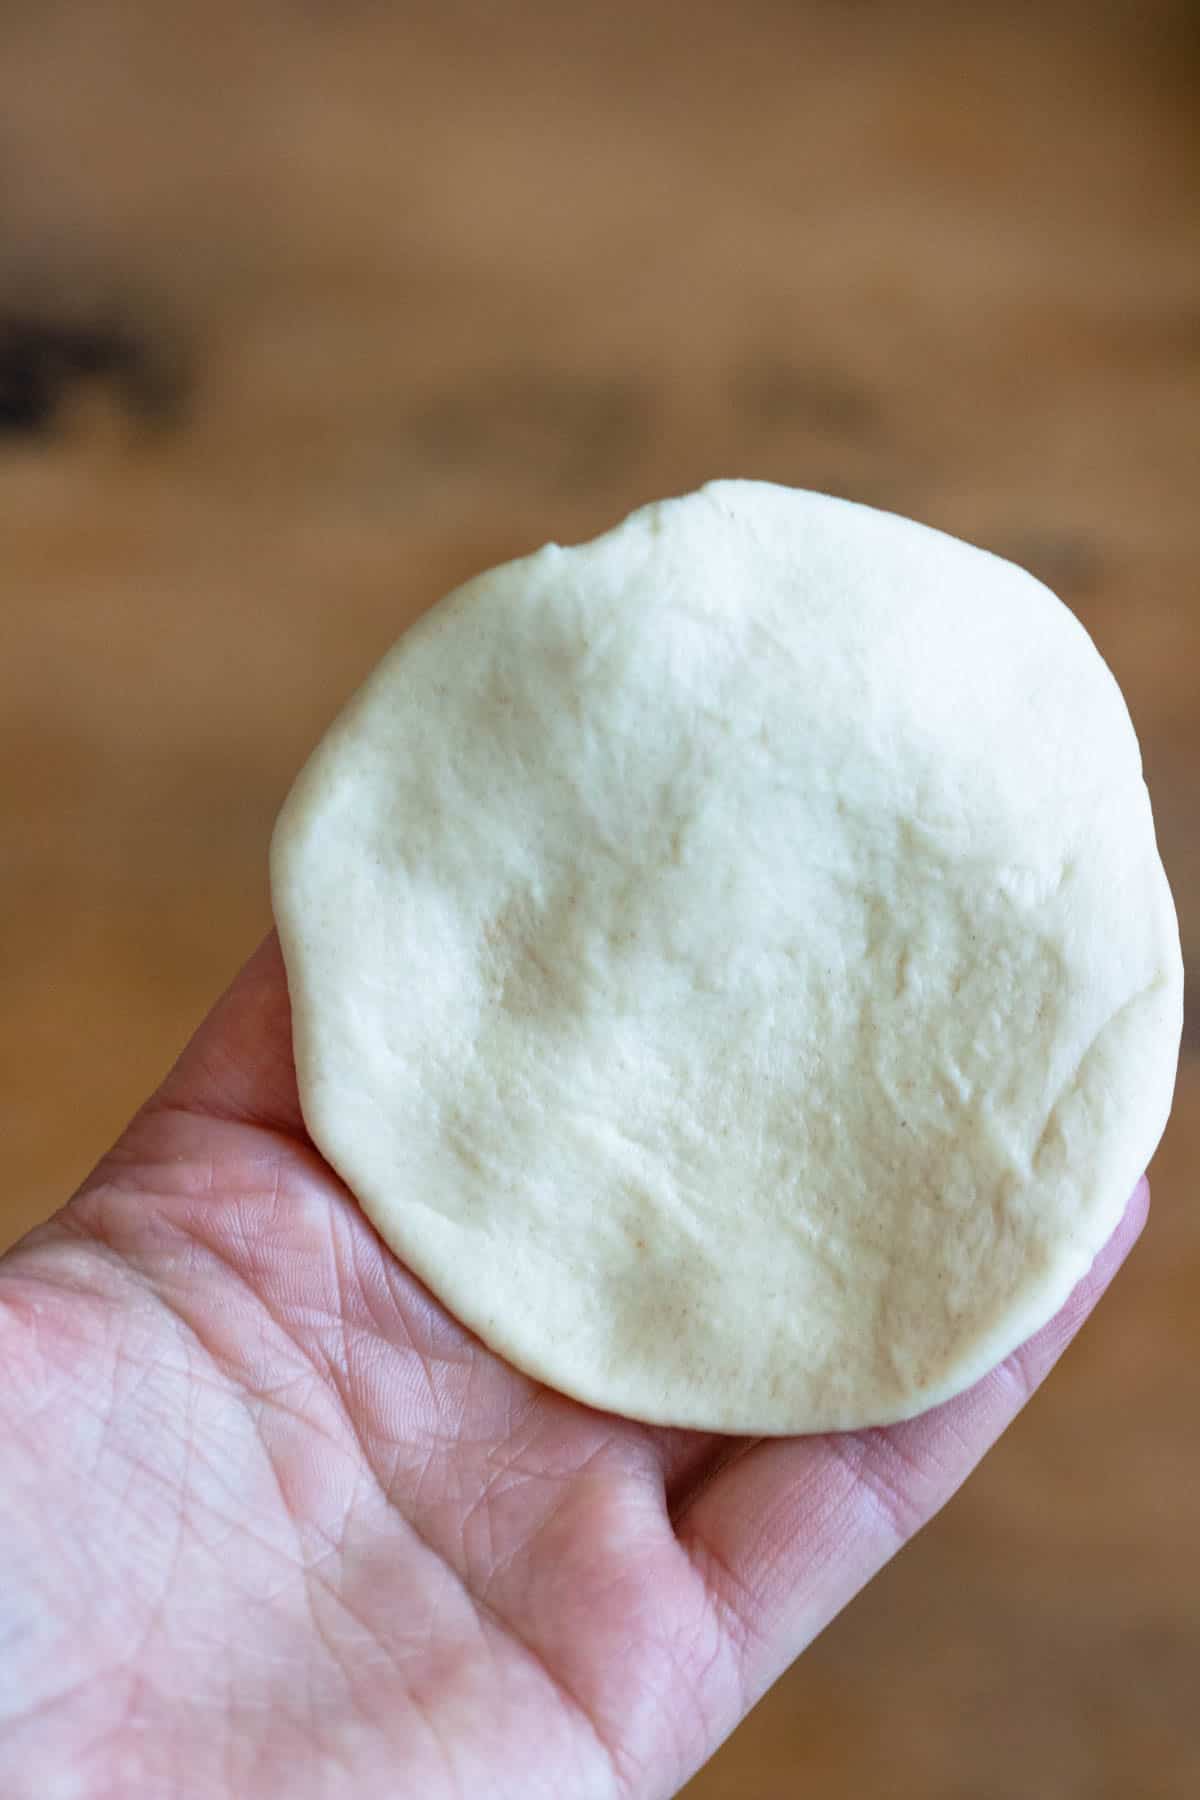 Hand holding a piece of dough for preparing beef empanada.